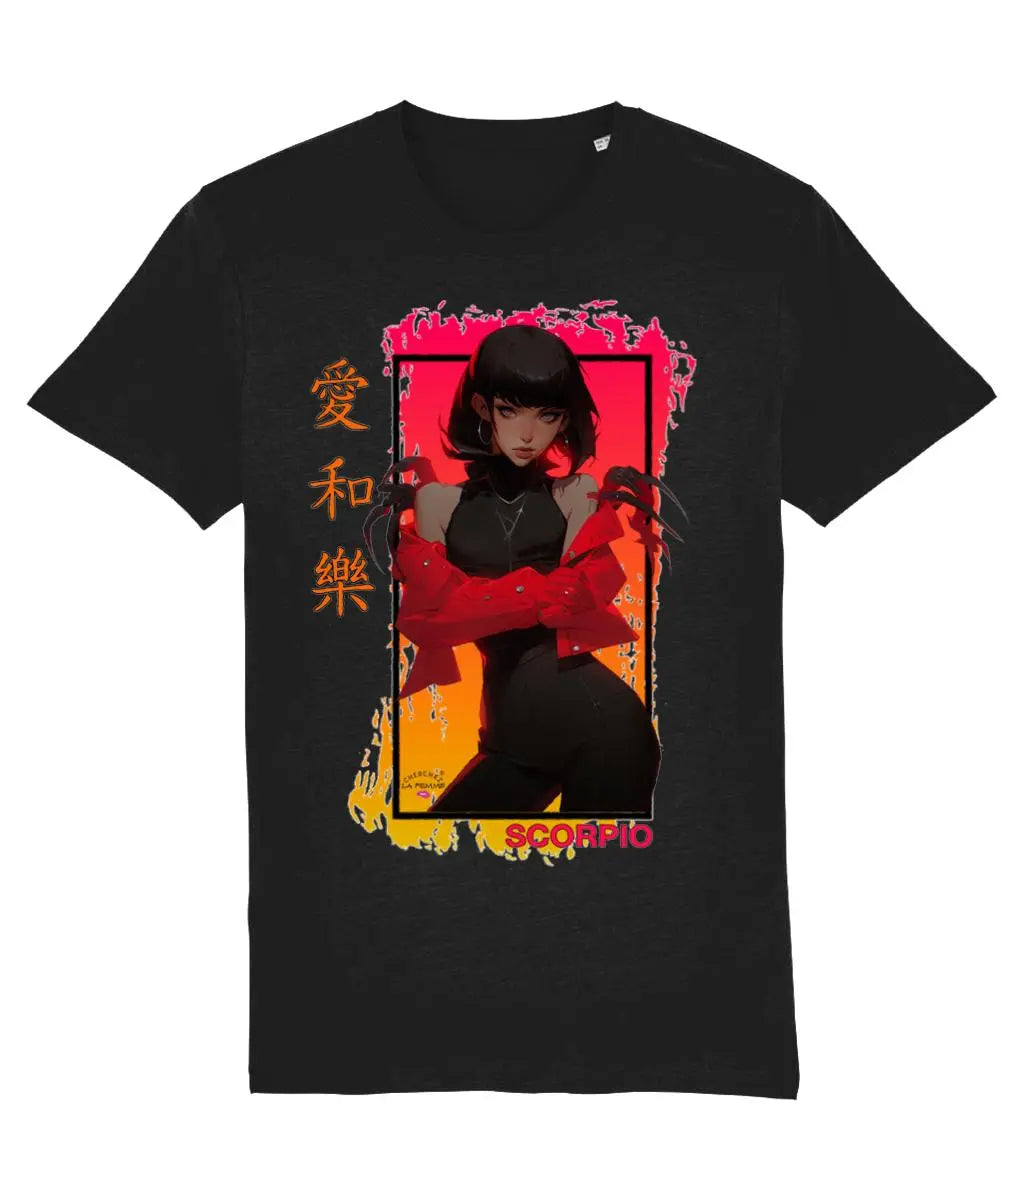 Scorpio Anime Inspired Organic T-shirt Cherchez La Femme brand